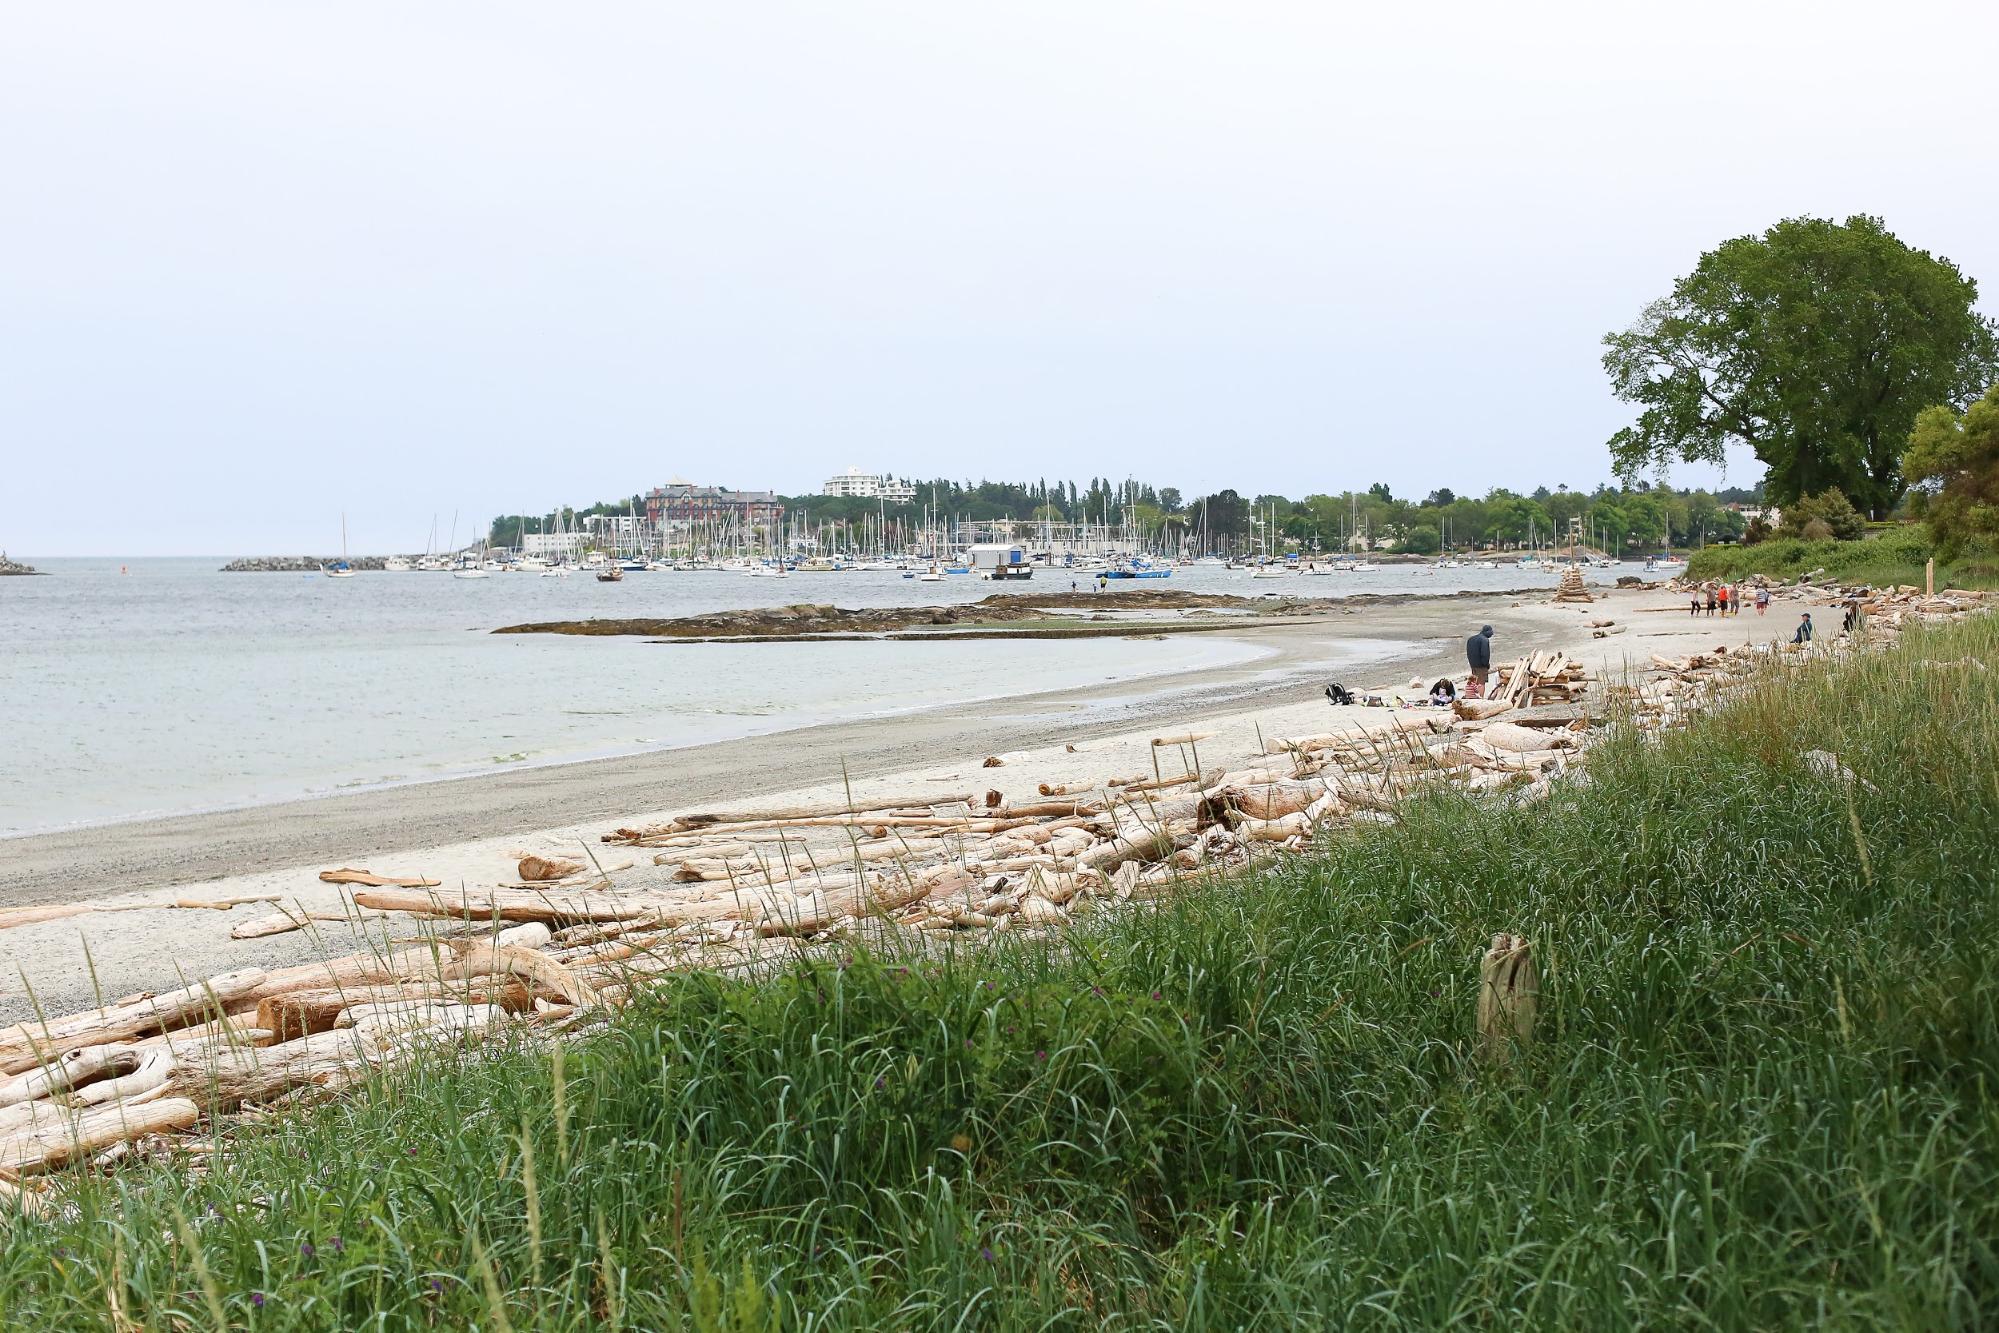 Long green grass surrounds a sandy beach covered in driftwood.